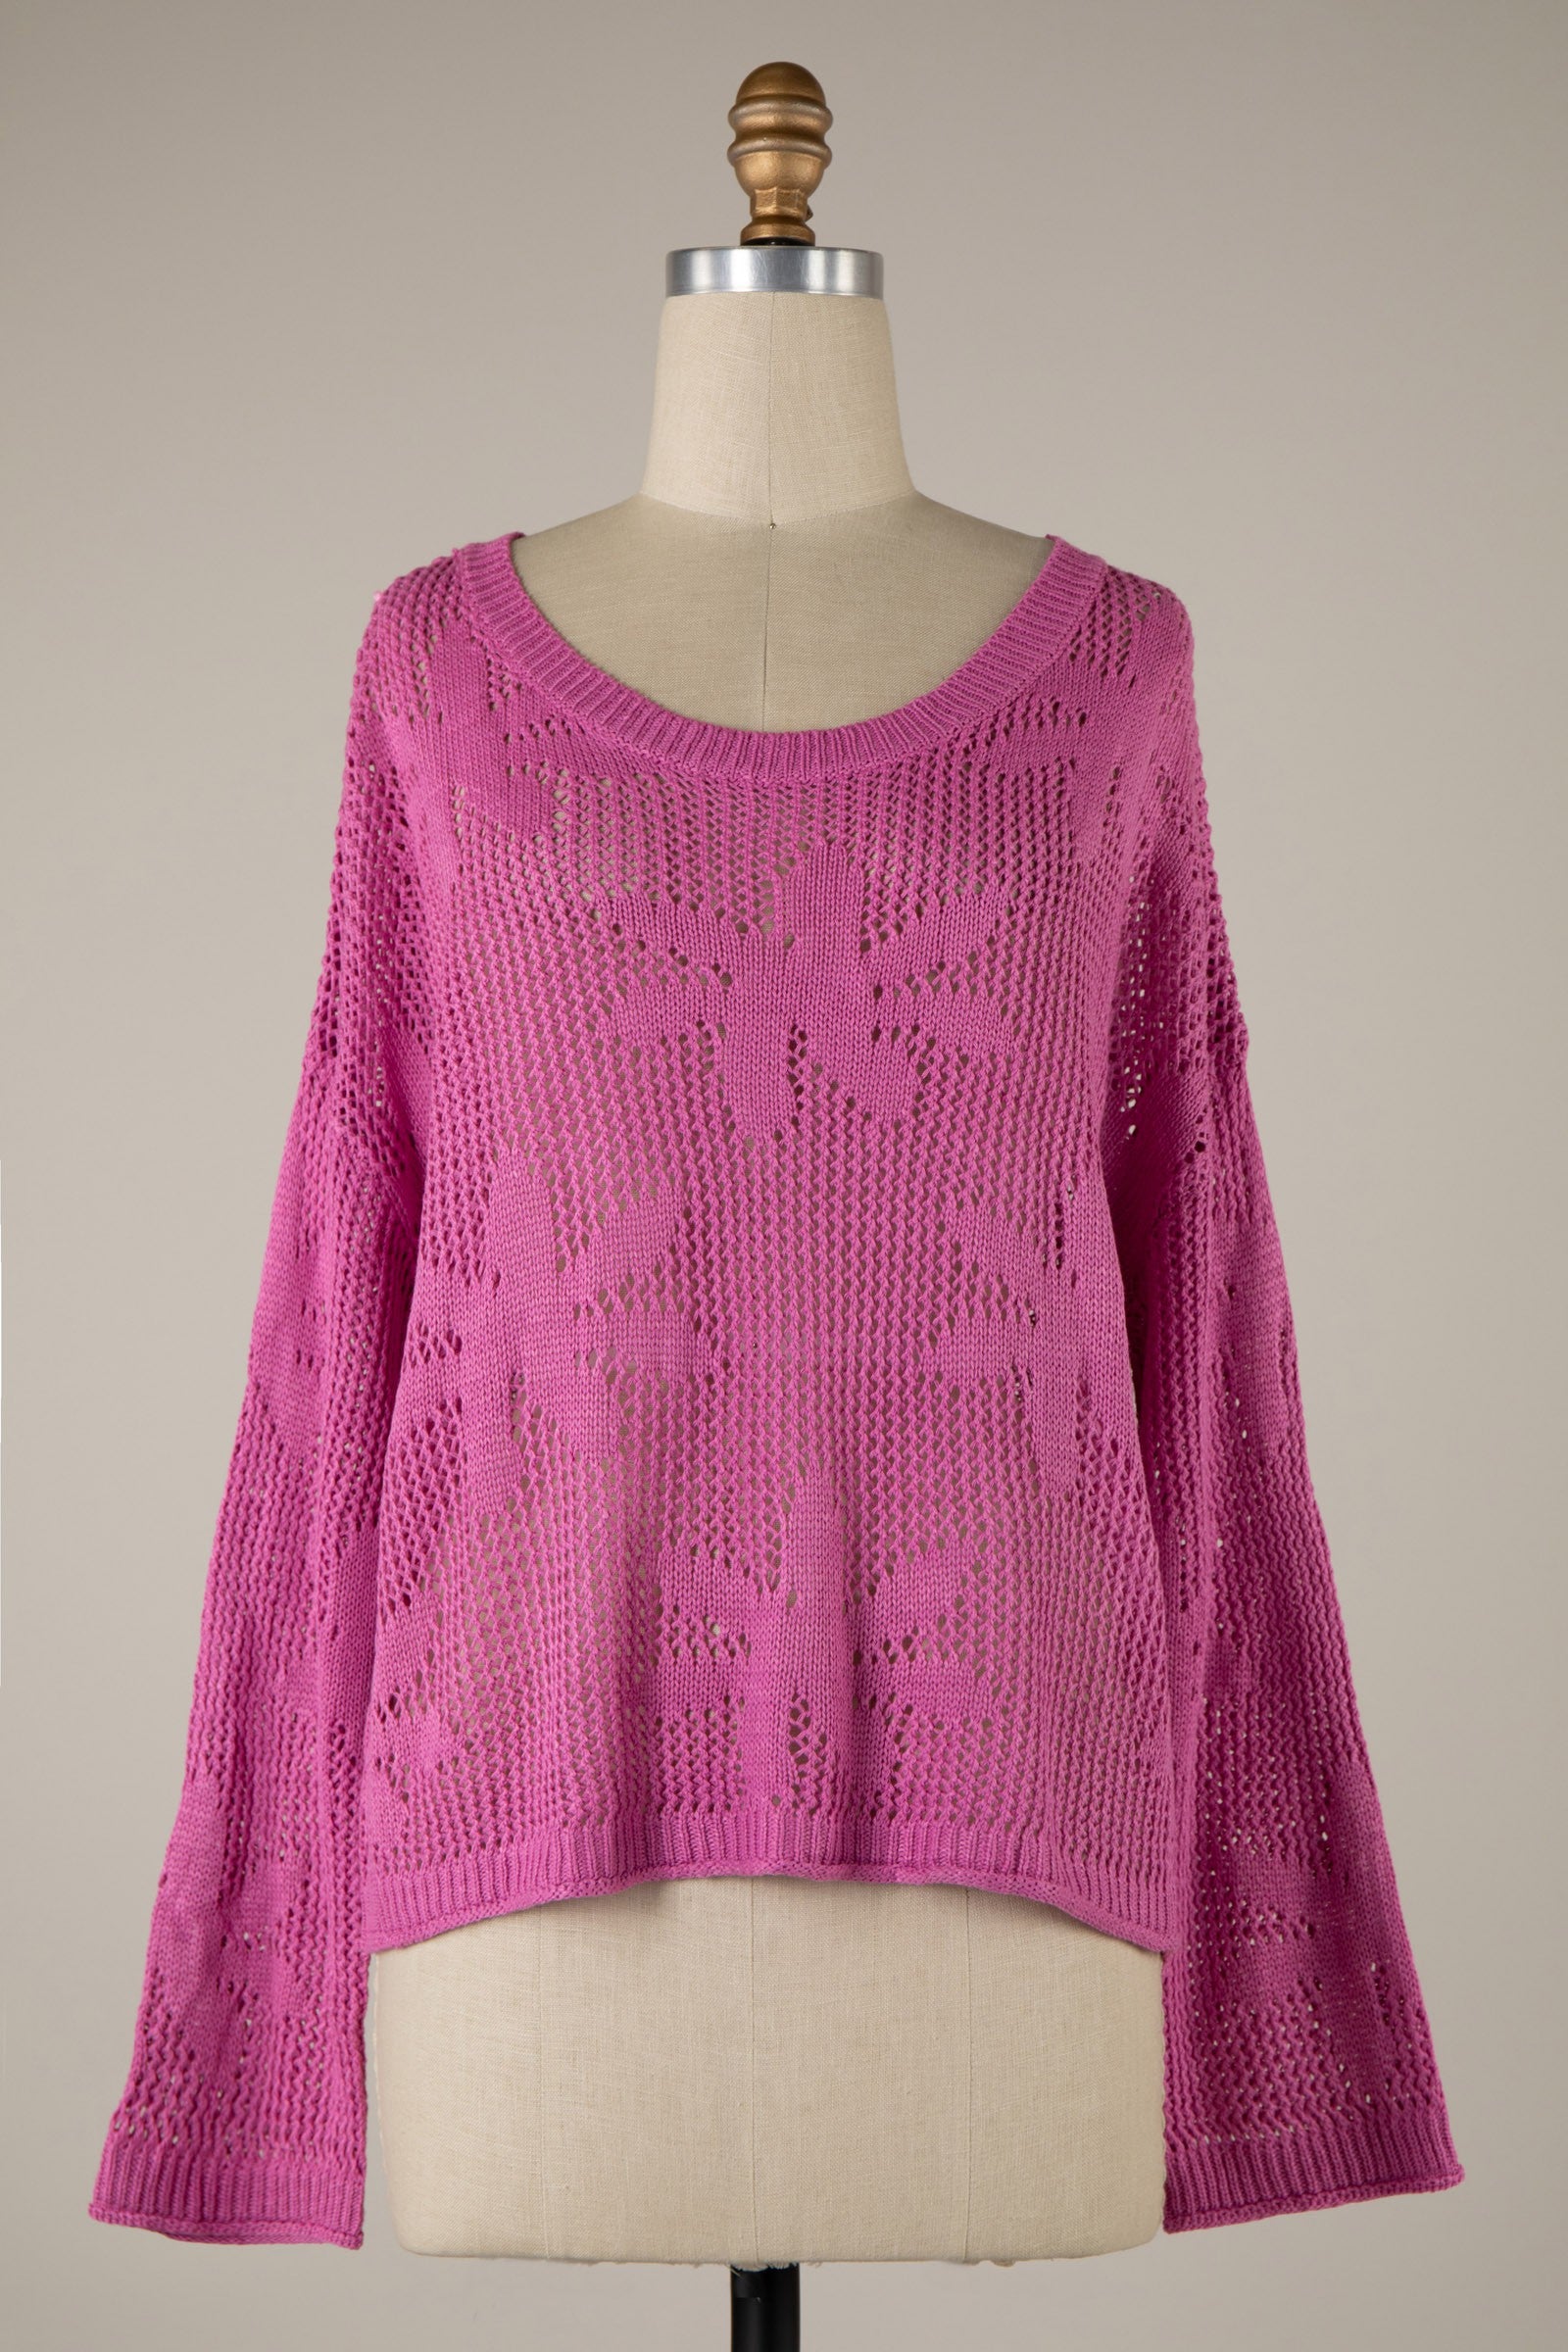 Lavender Crochet Floral Sweater